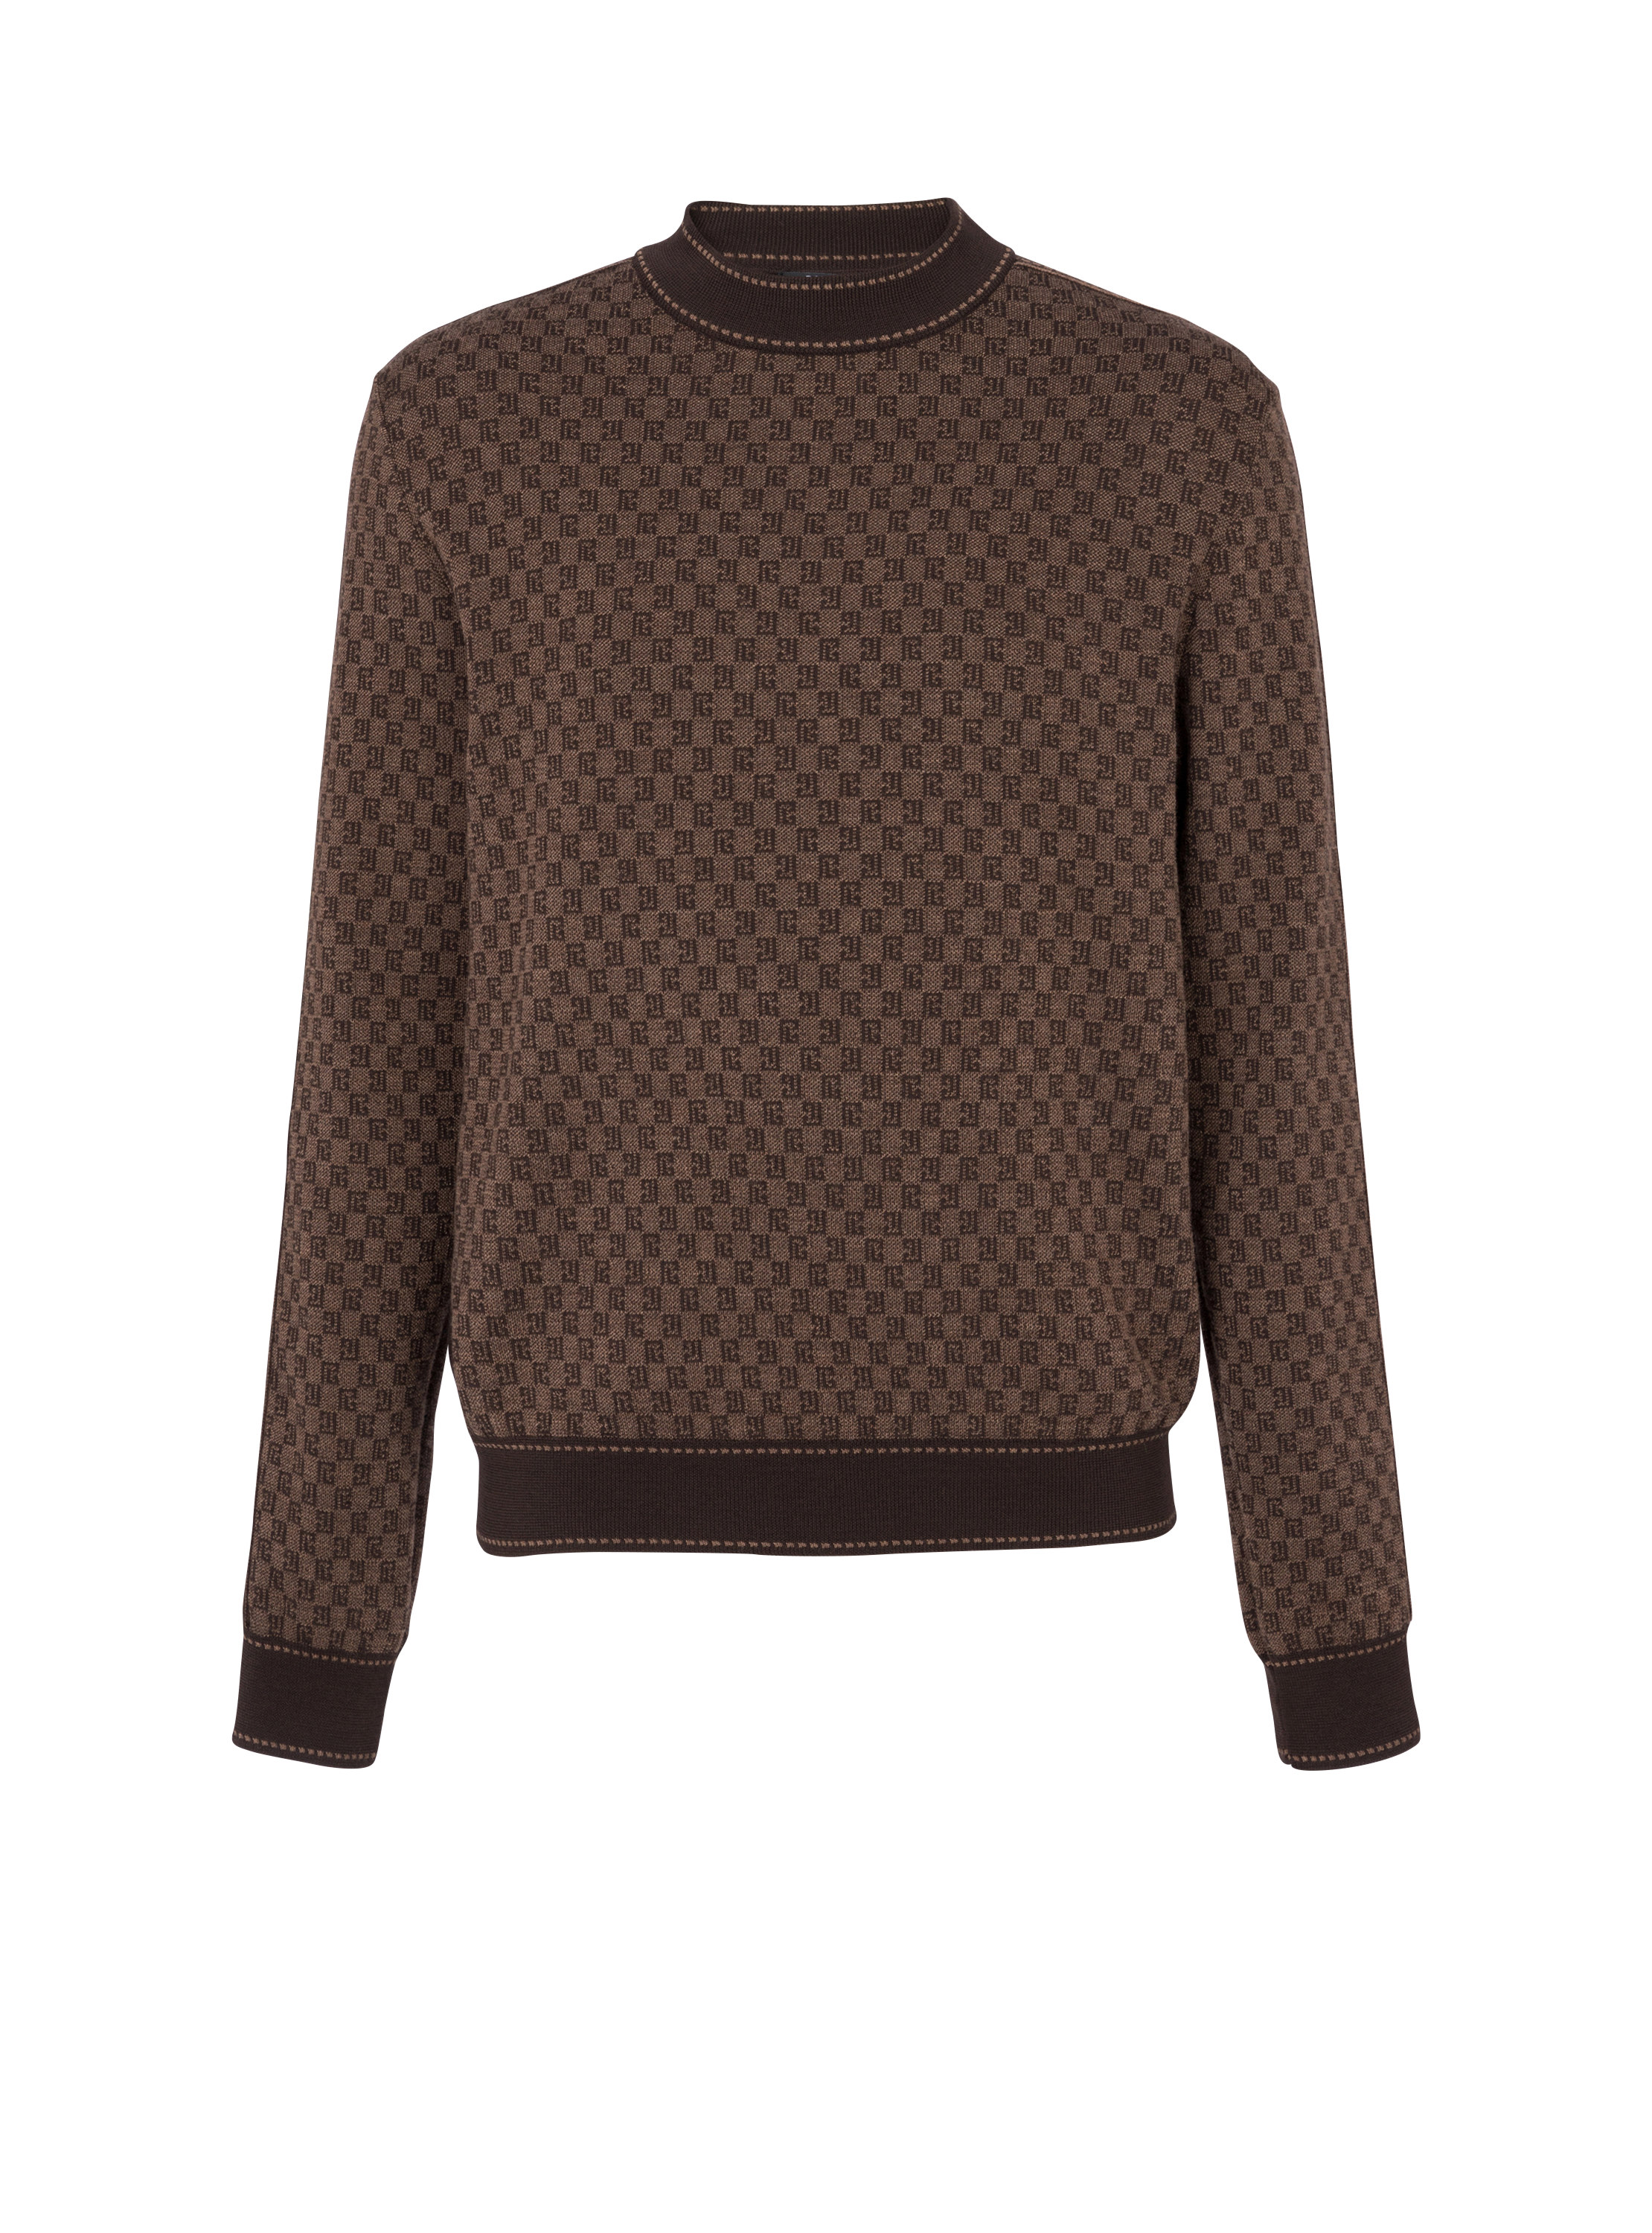 Knit jumper with mini monogram, brown, hi-res